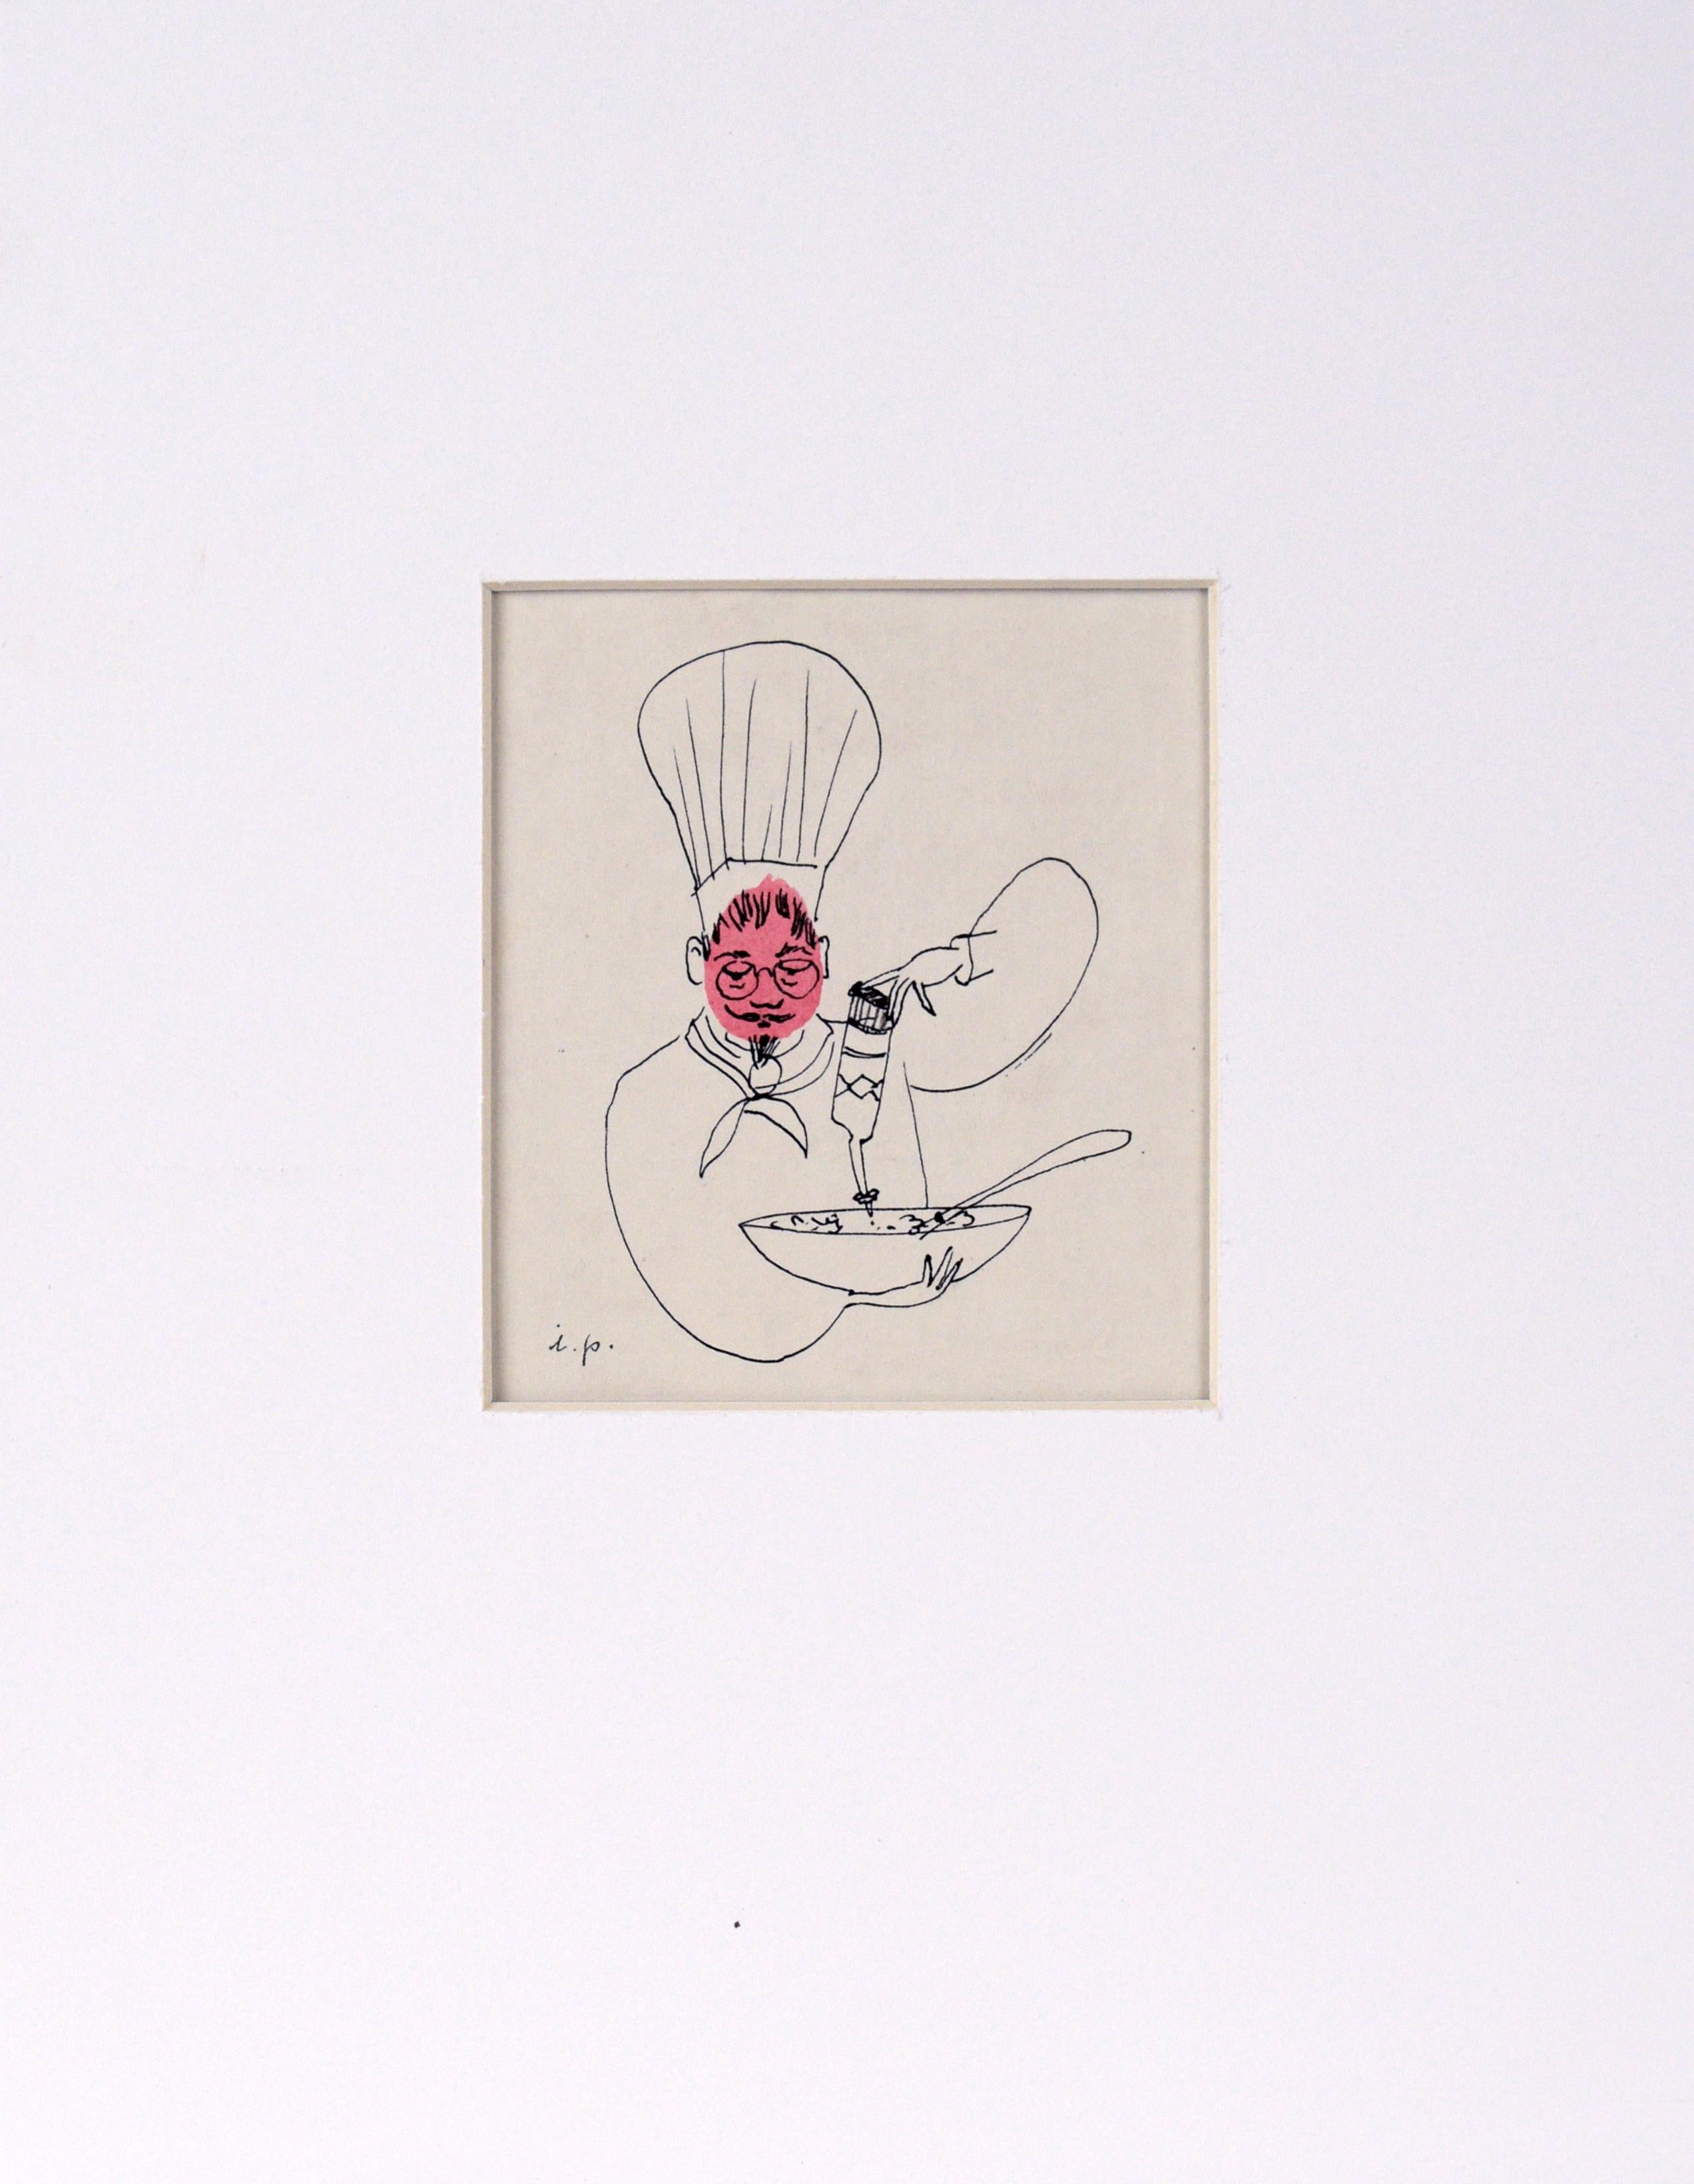 Irene Pattinson Figurative Art - Chef Pasta - Vintage Illustration in Ink and Watercolor